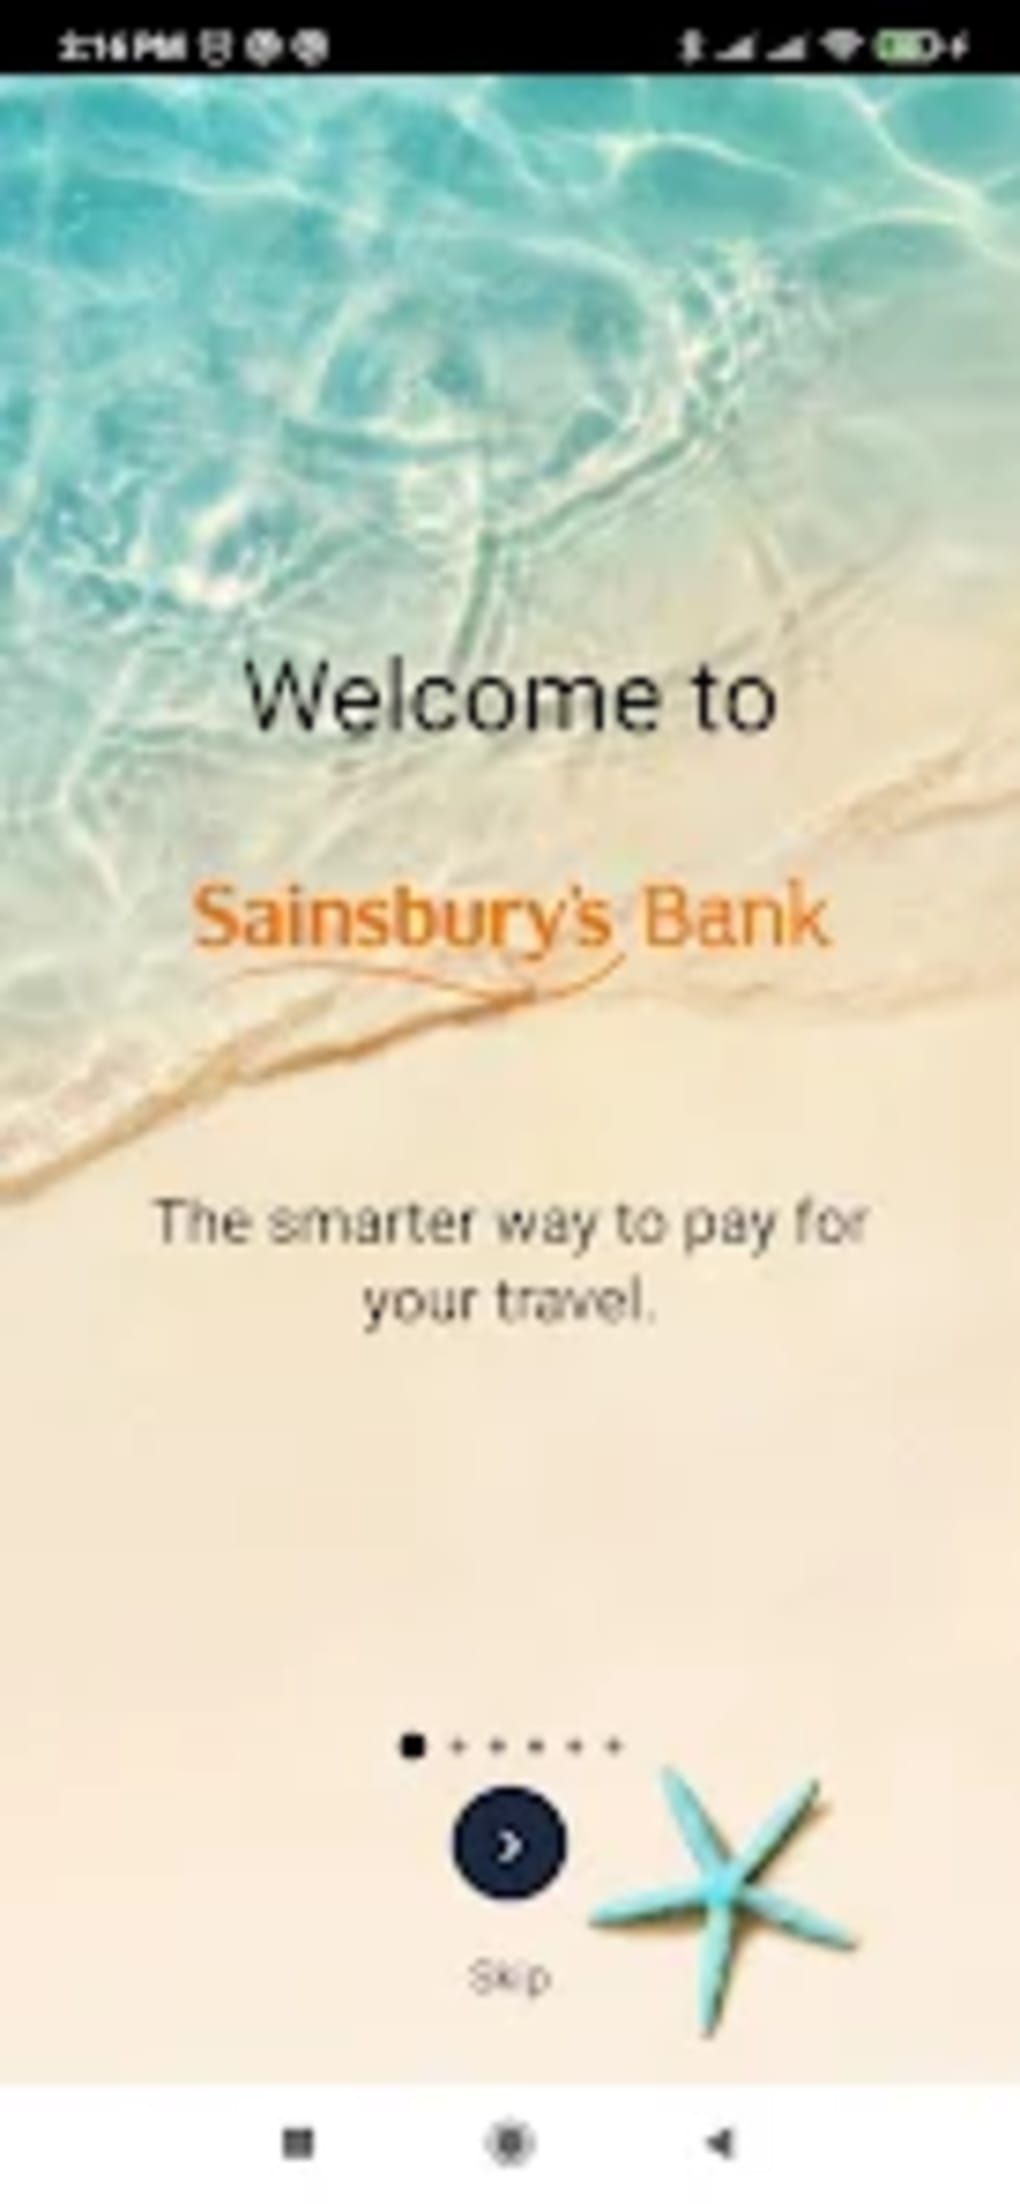 sainsbury's travel money card